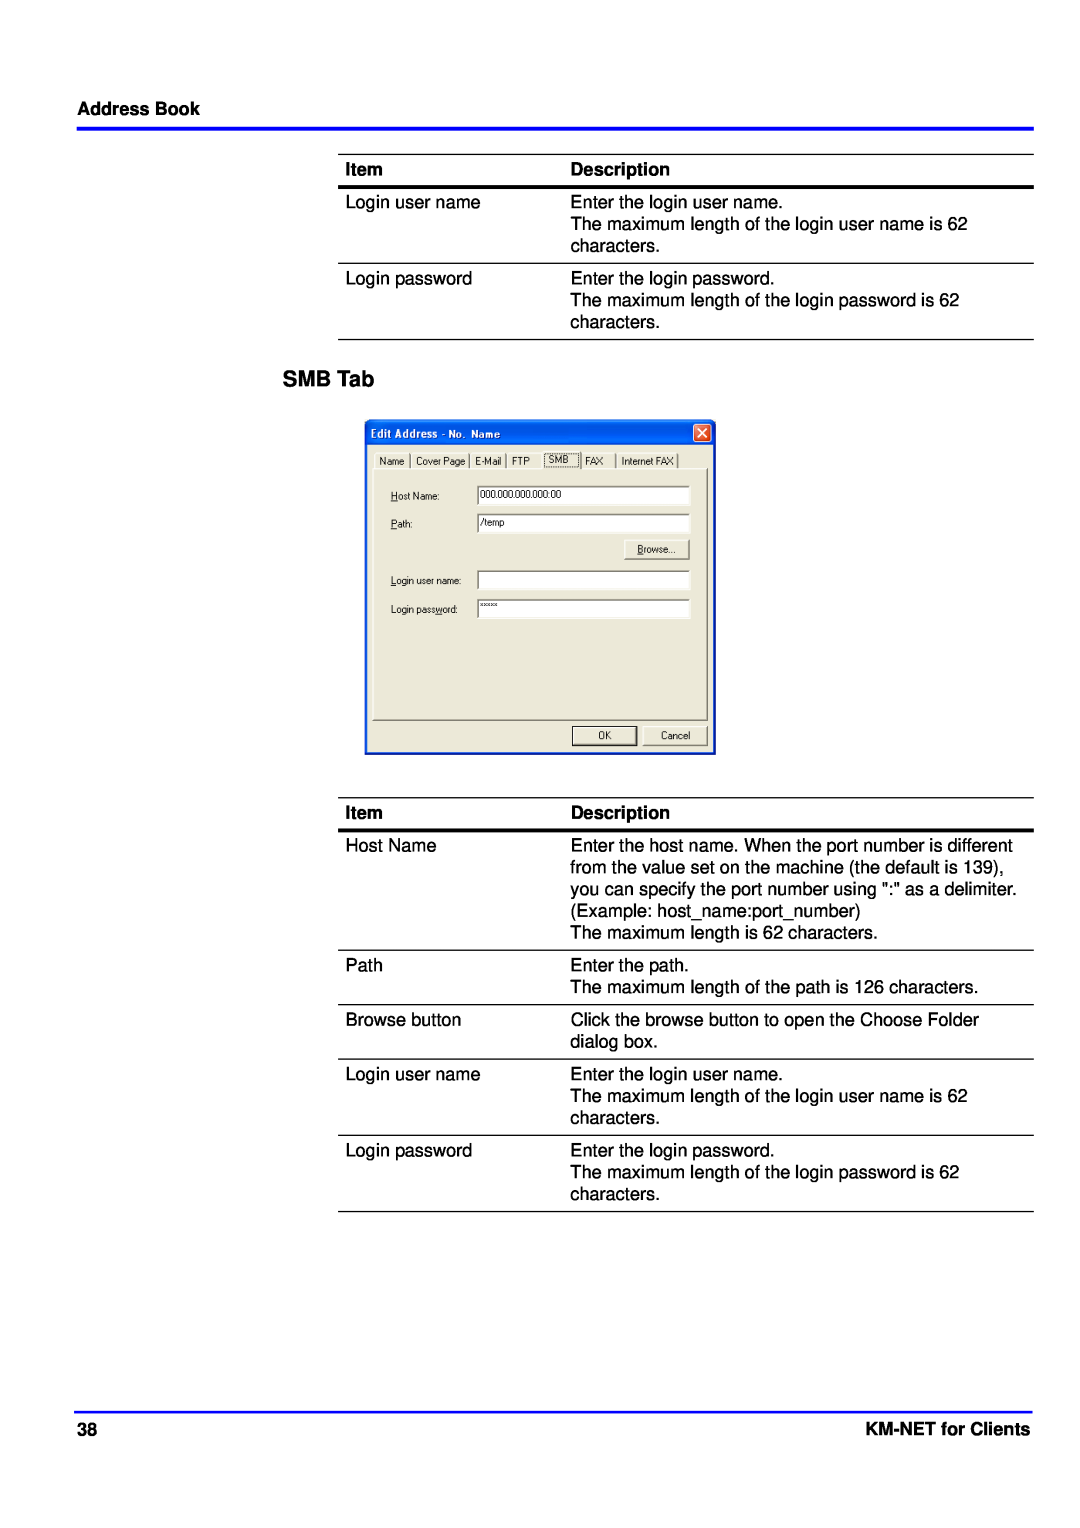 Kyocera manual SMB Tab, Address Book, Item, Description, KM-NETfor Clients 